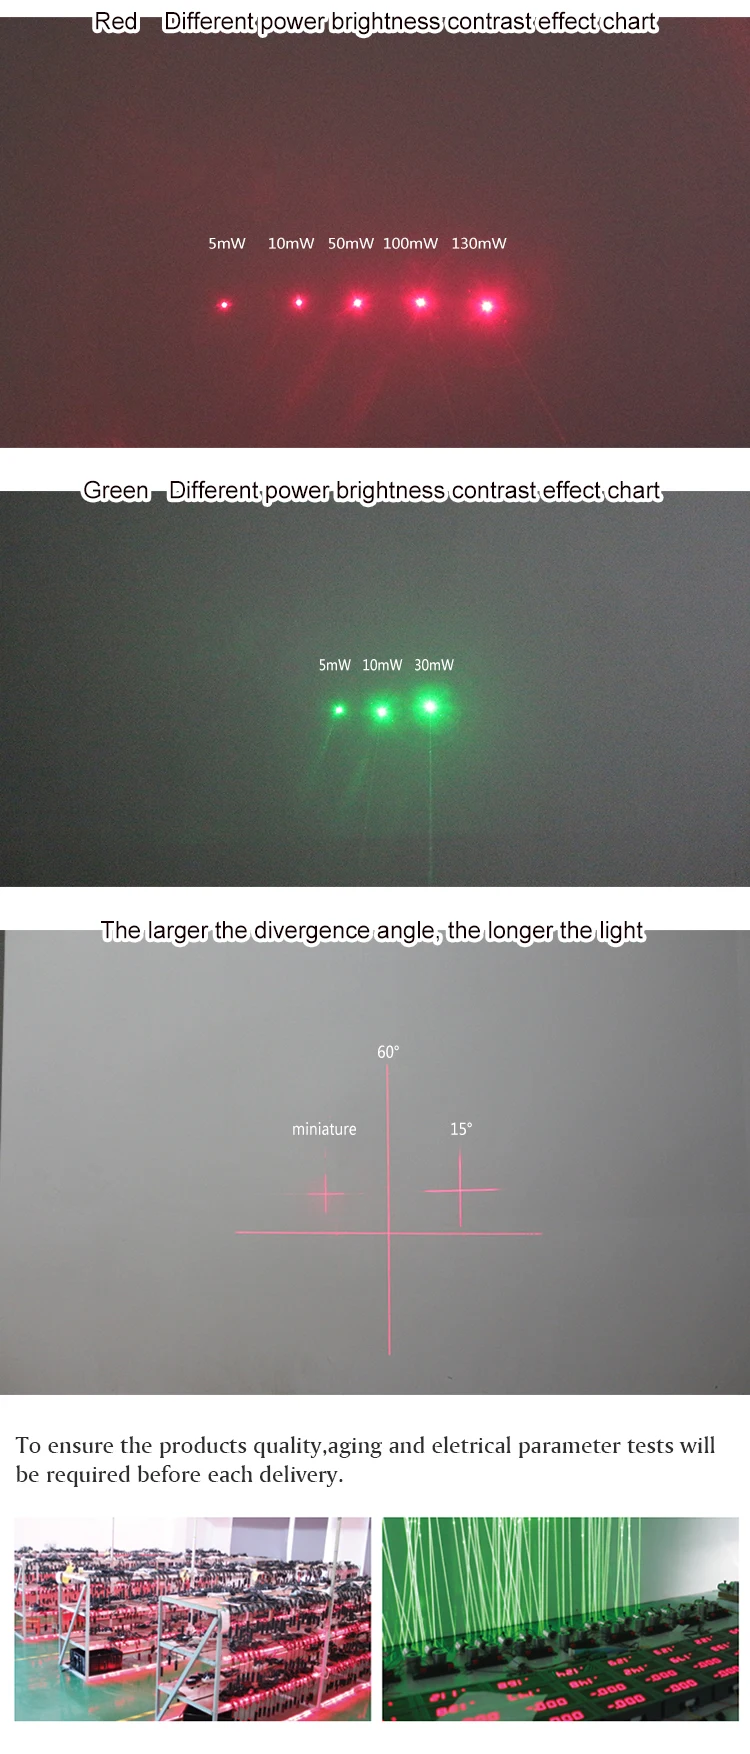 Mw Laser Chart